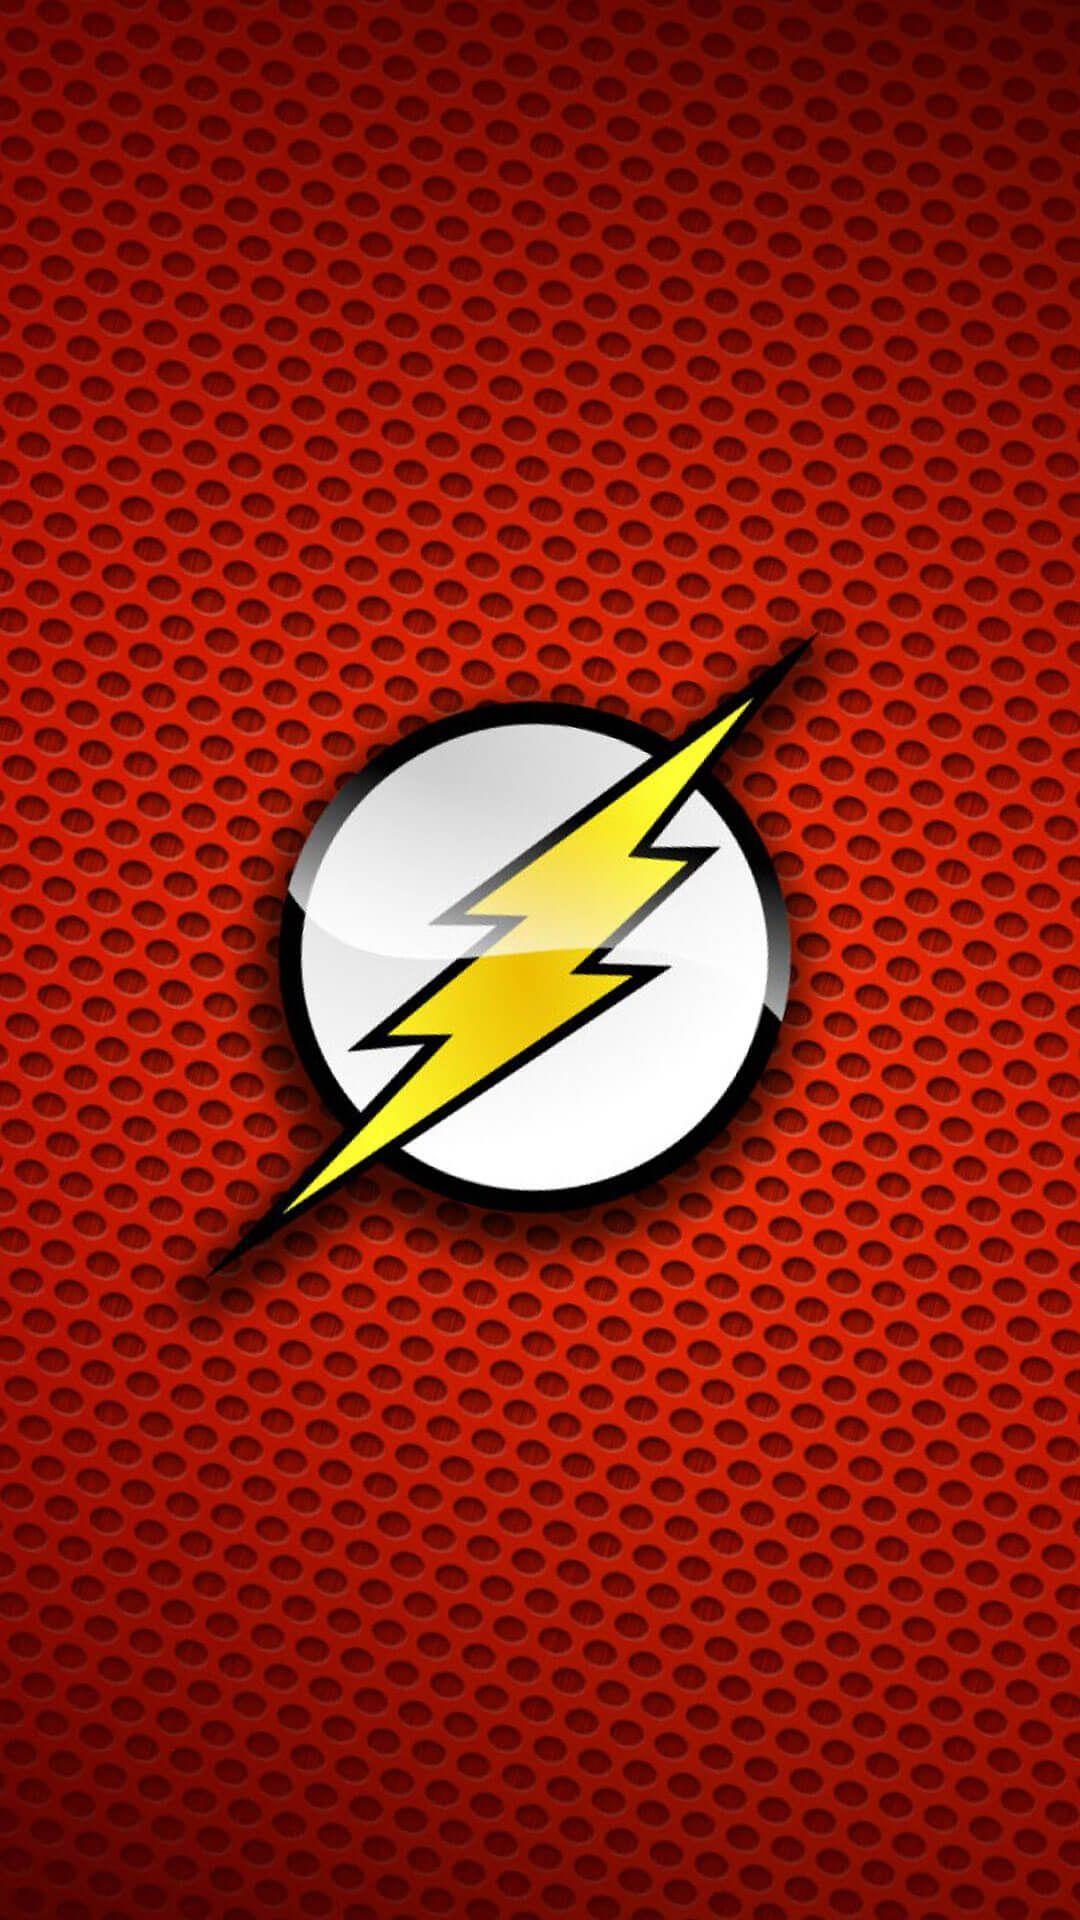 The Flash Logo iPhone 6 Wallpaper HD. Flash wallpaper, Flash logo